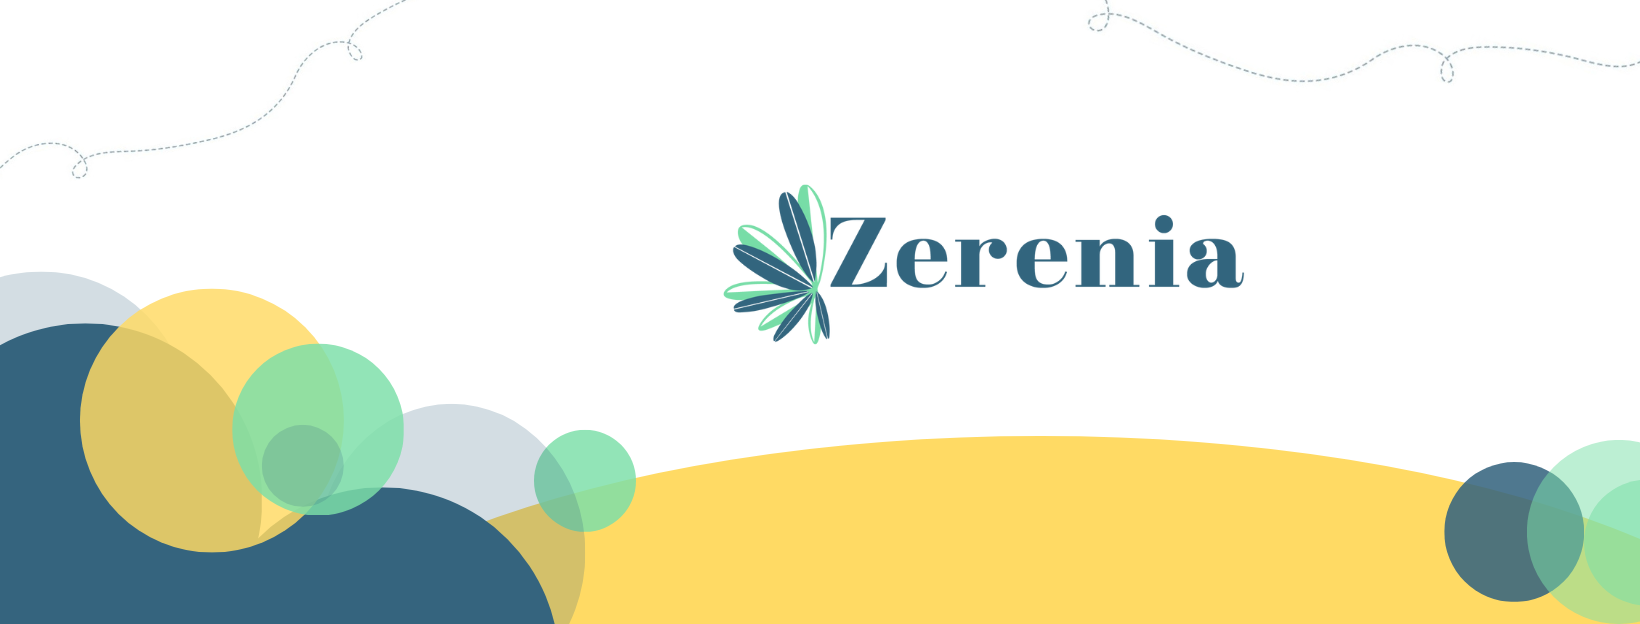 Zerenia Clinic Cover Image